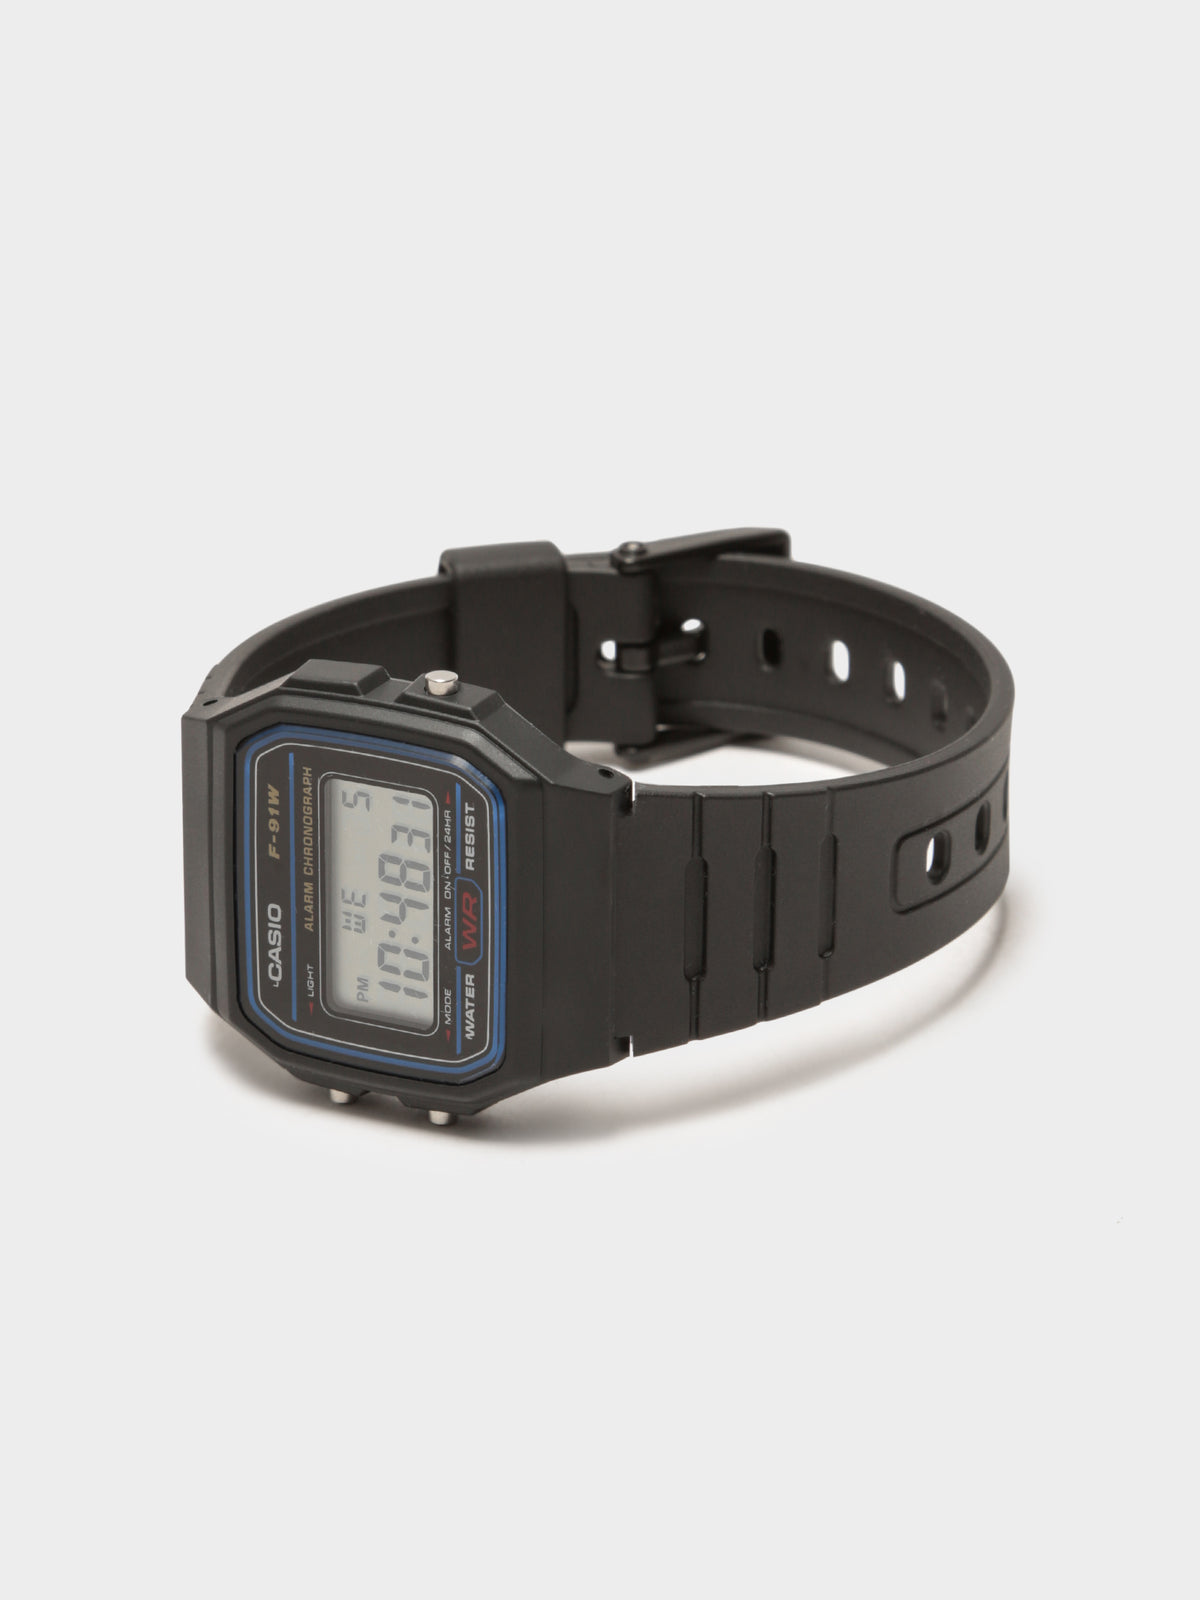 F91W-1 Classic Digital Sport Watch in Black